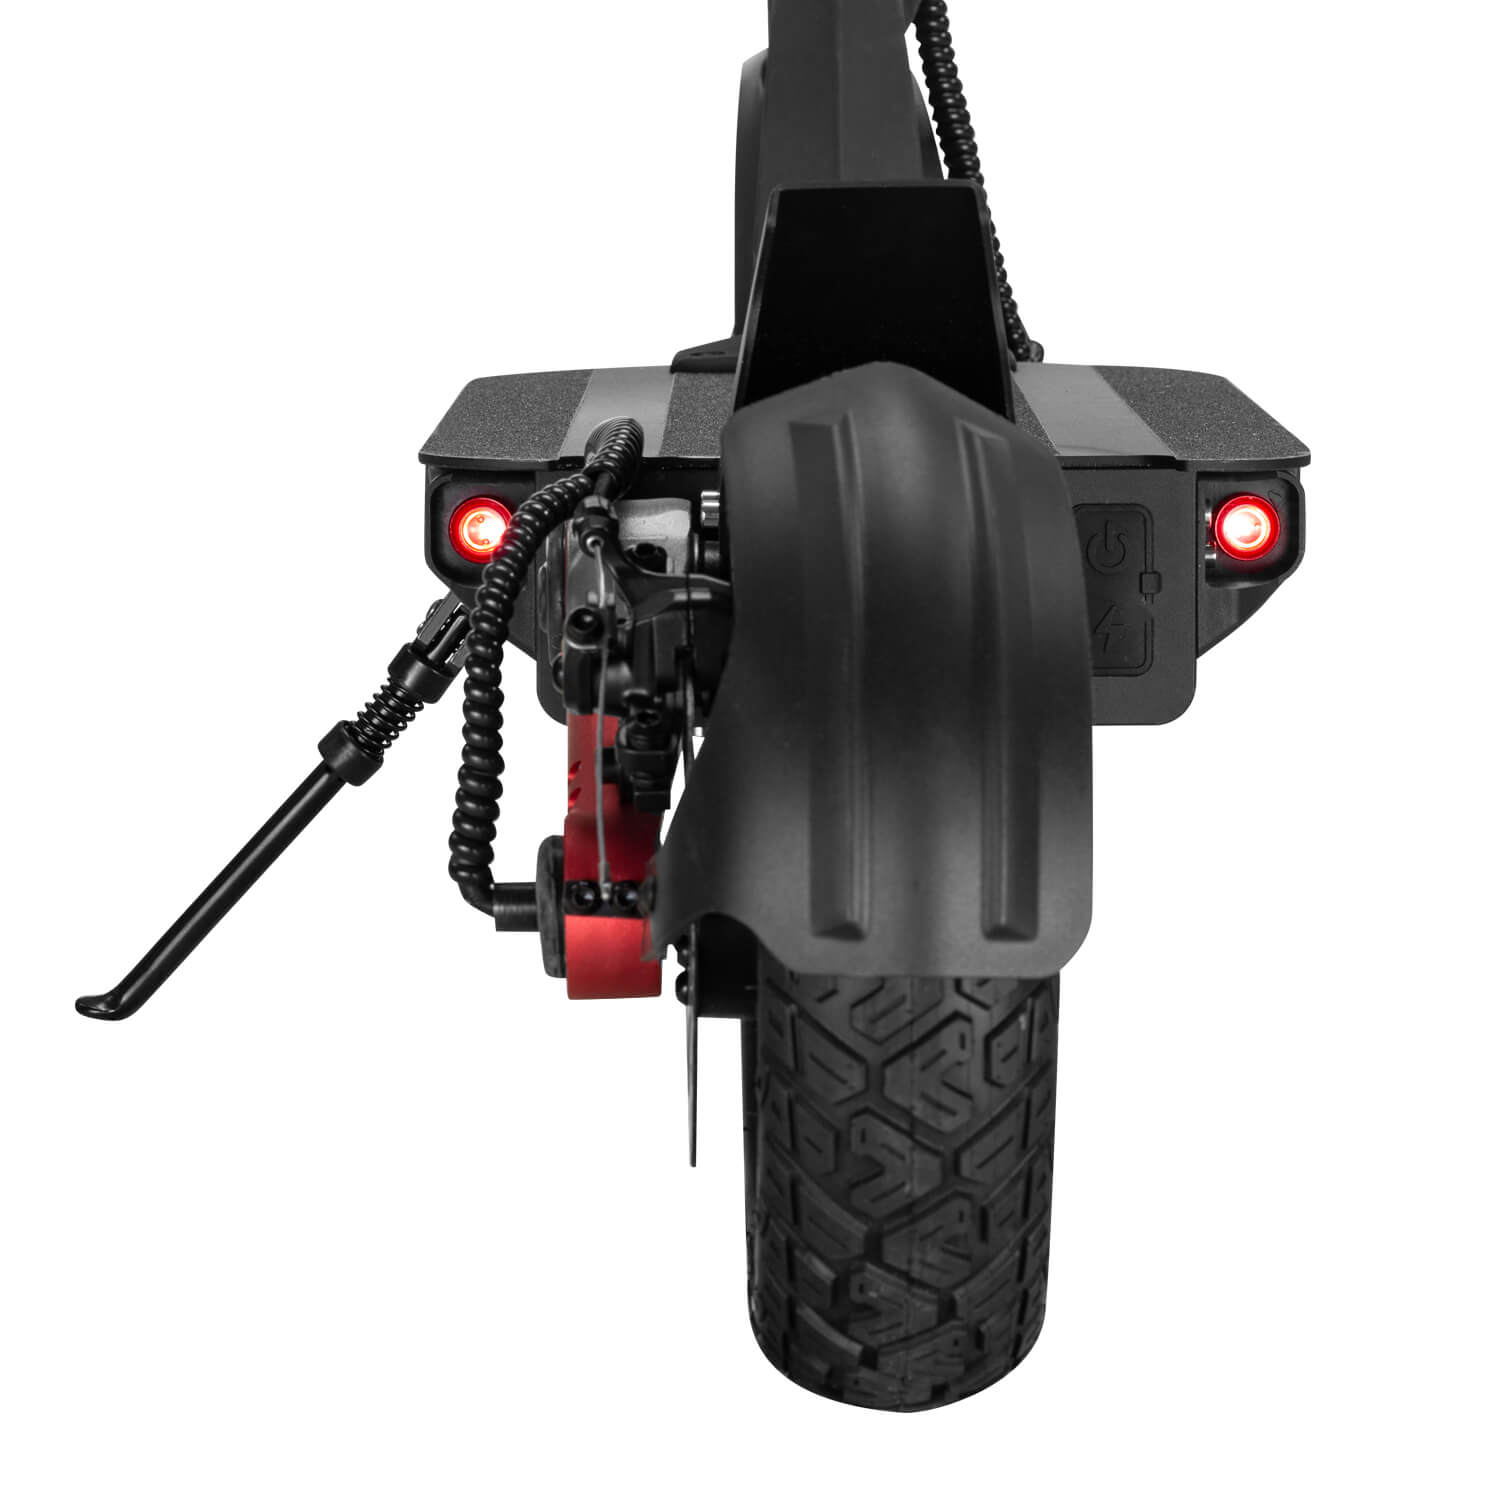 Hiboy Titan Pro  electric scooter